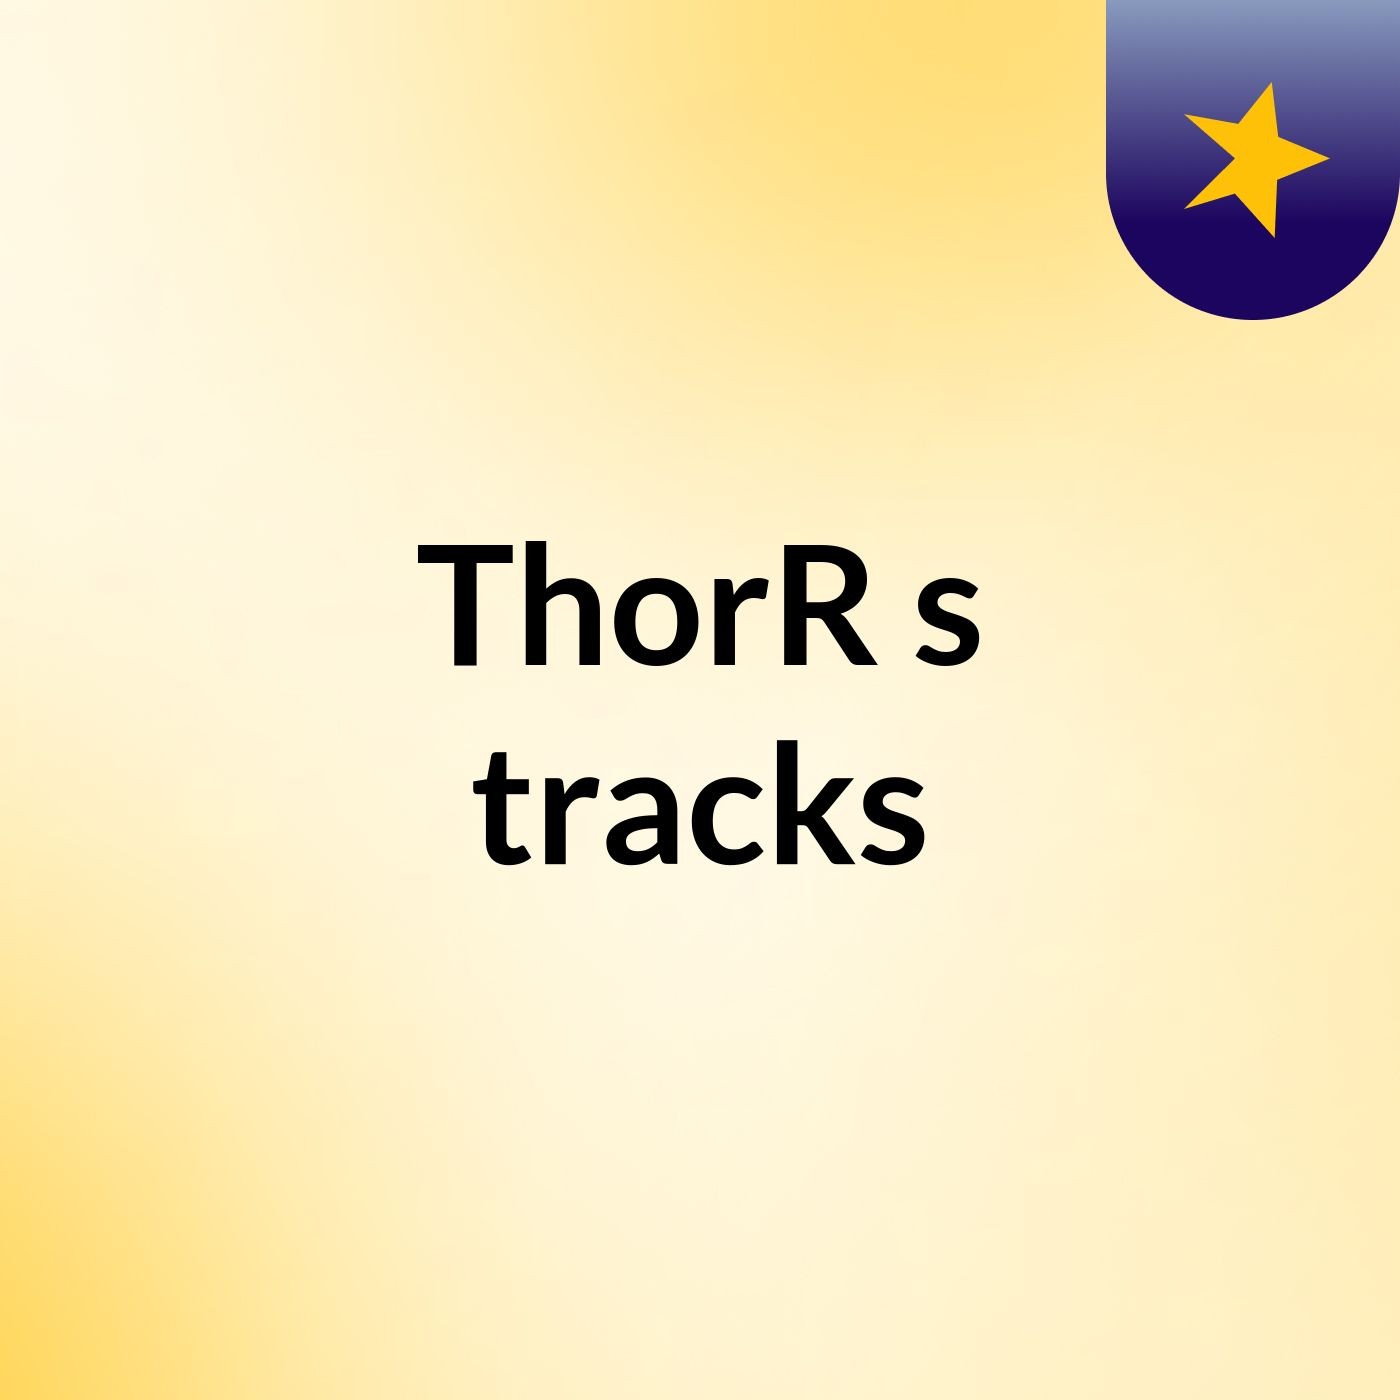 ThorR's tracks